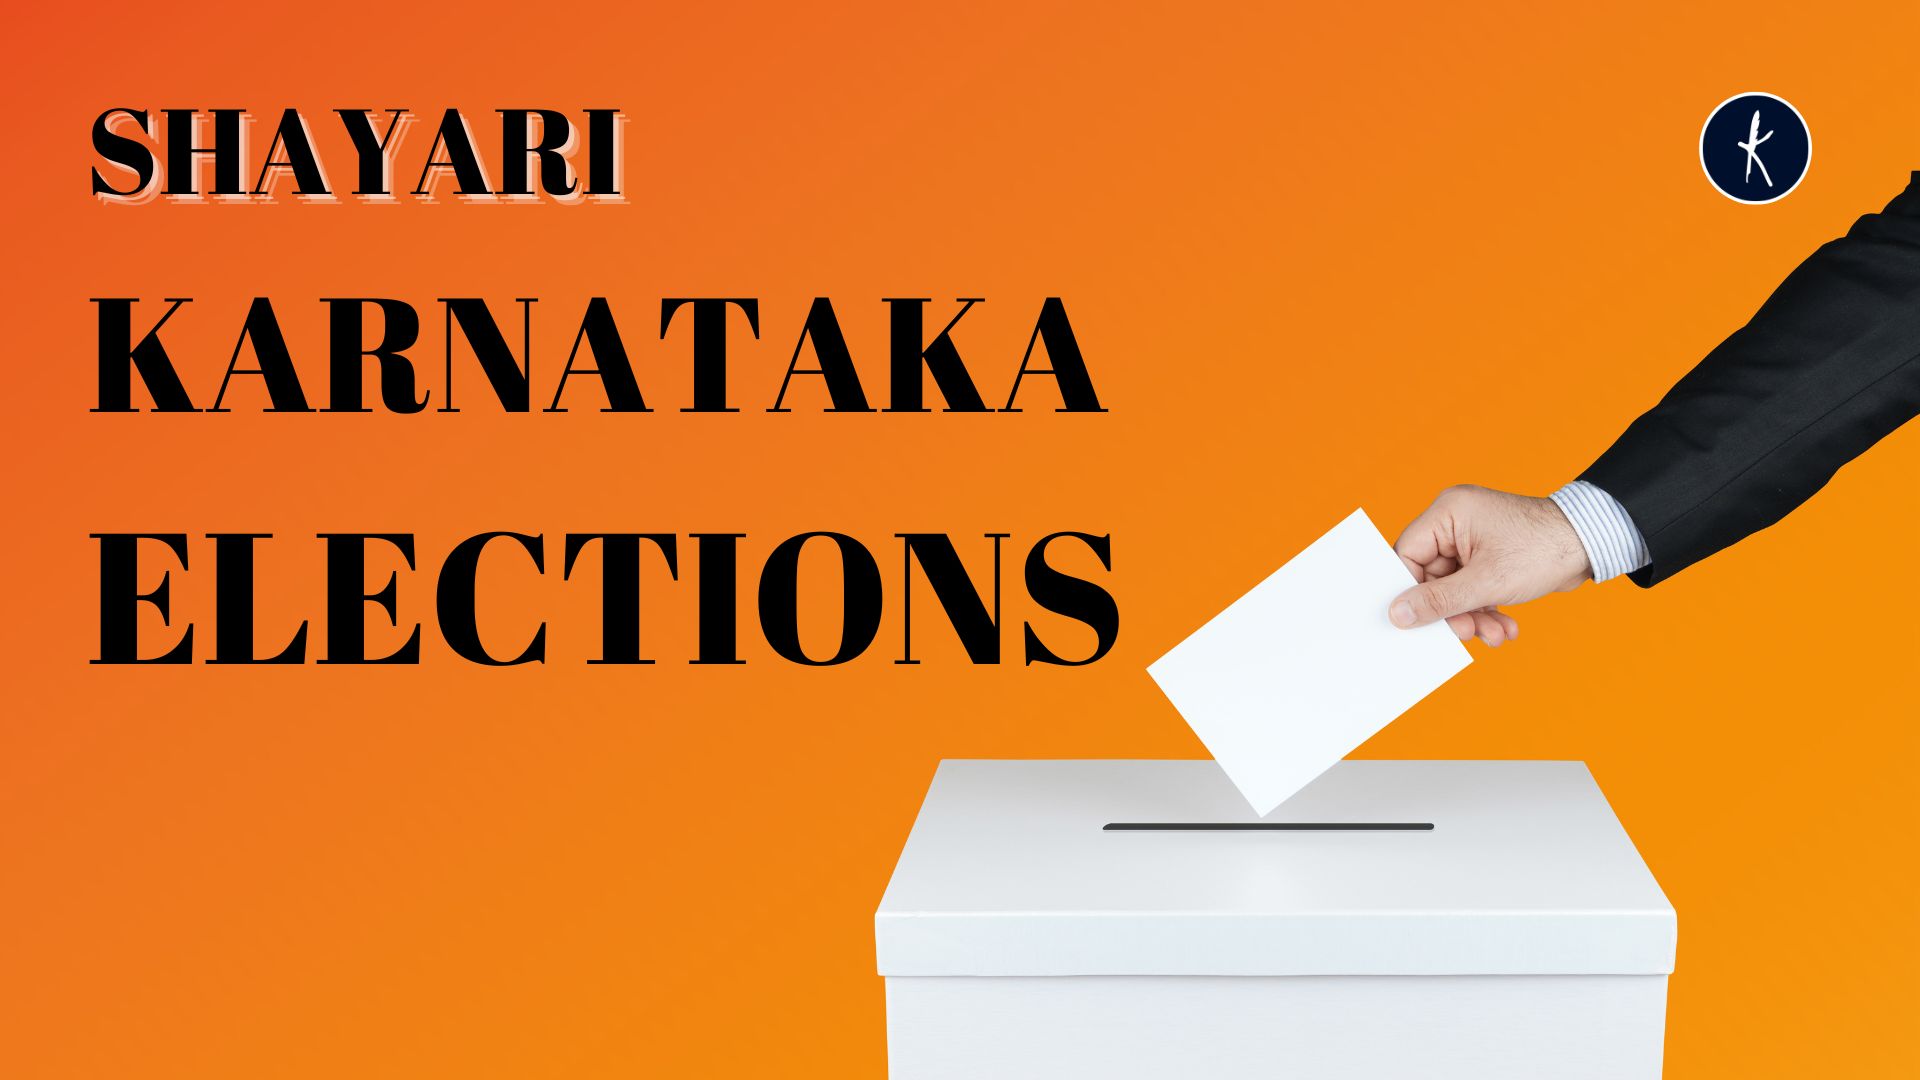 Shayari  |  Karnataka Elections's image